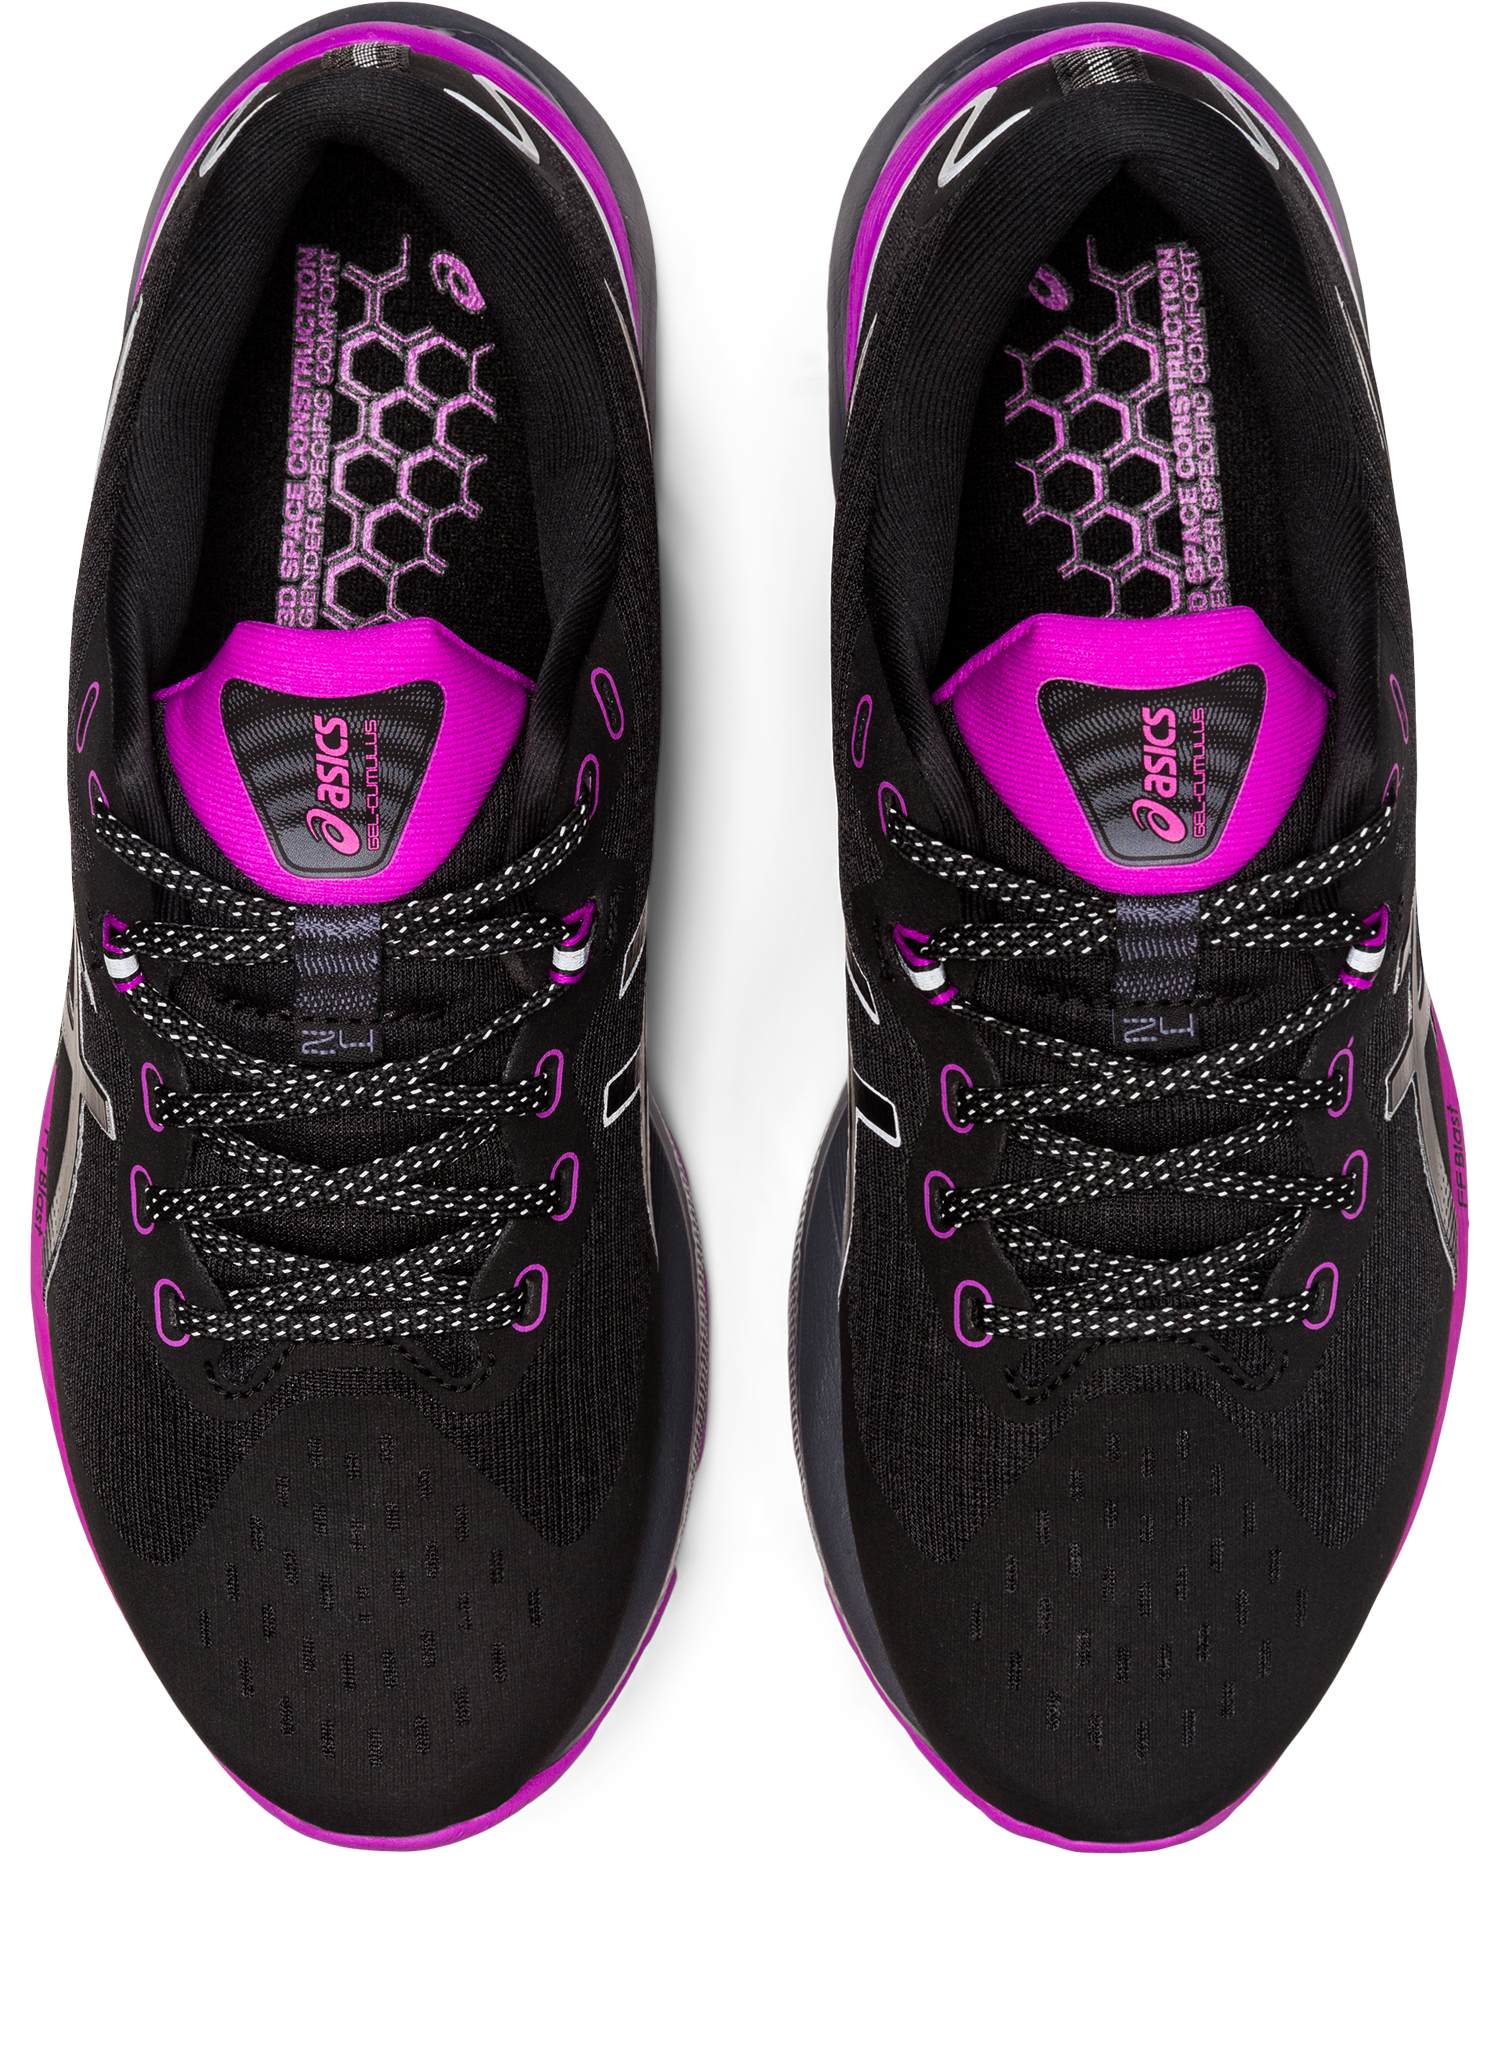 Asics Women's Gel-Cumulus 24 Lite-Show Running Shoes in Black/Orchid